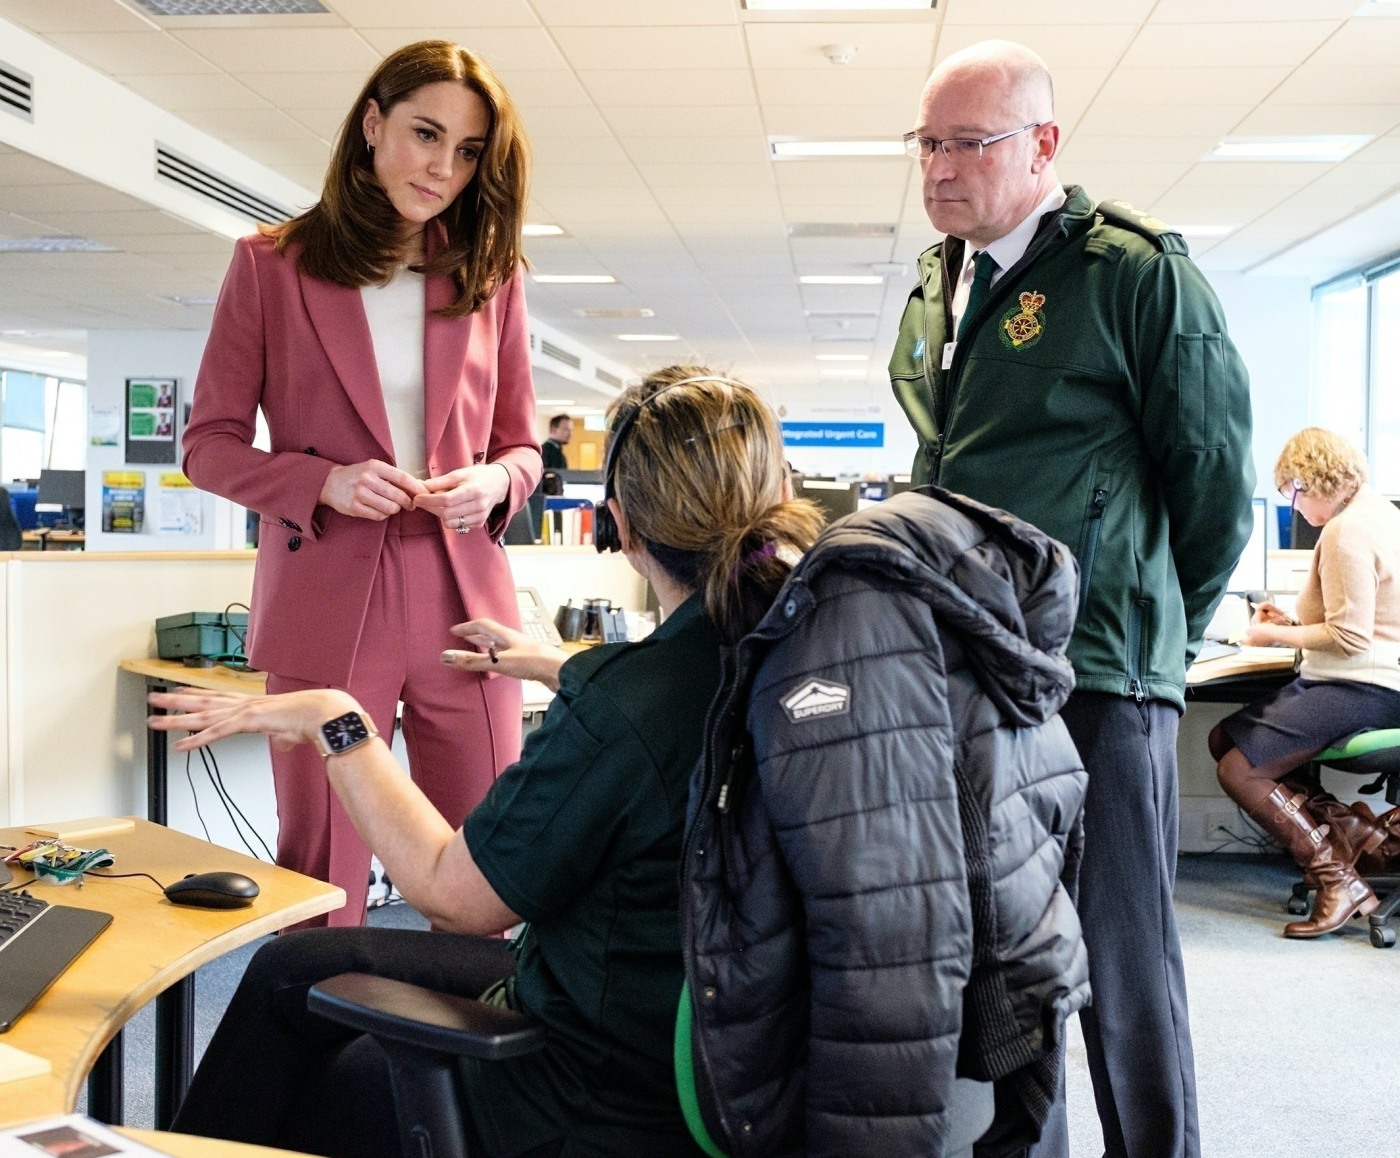 The Duke and Duchess of Cambridge visit the London Ambulance Service during the Coronavirus crisis!